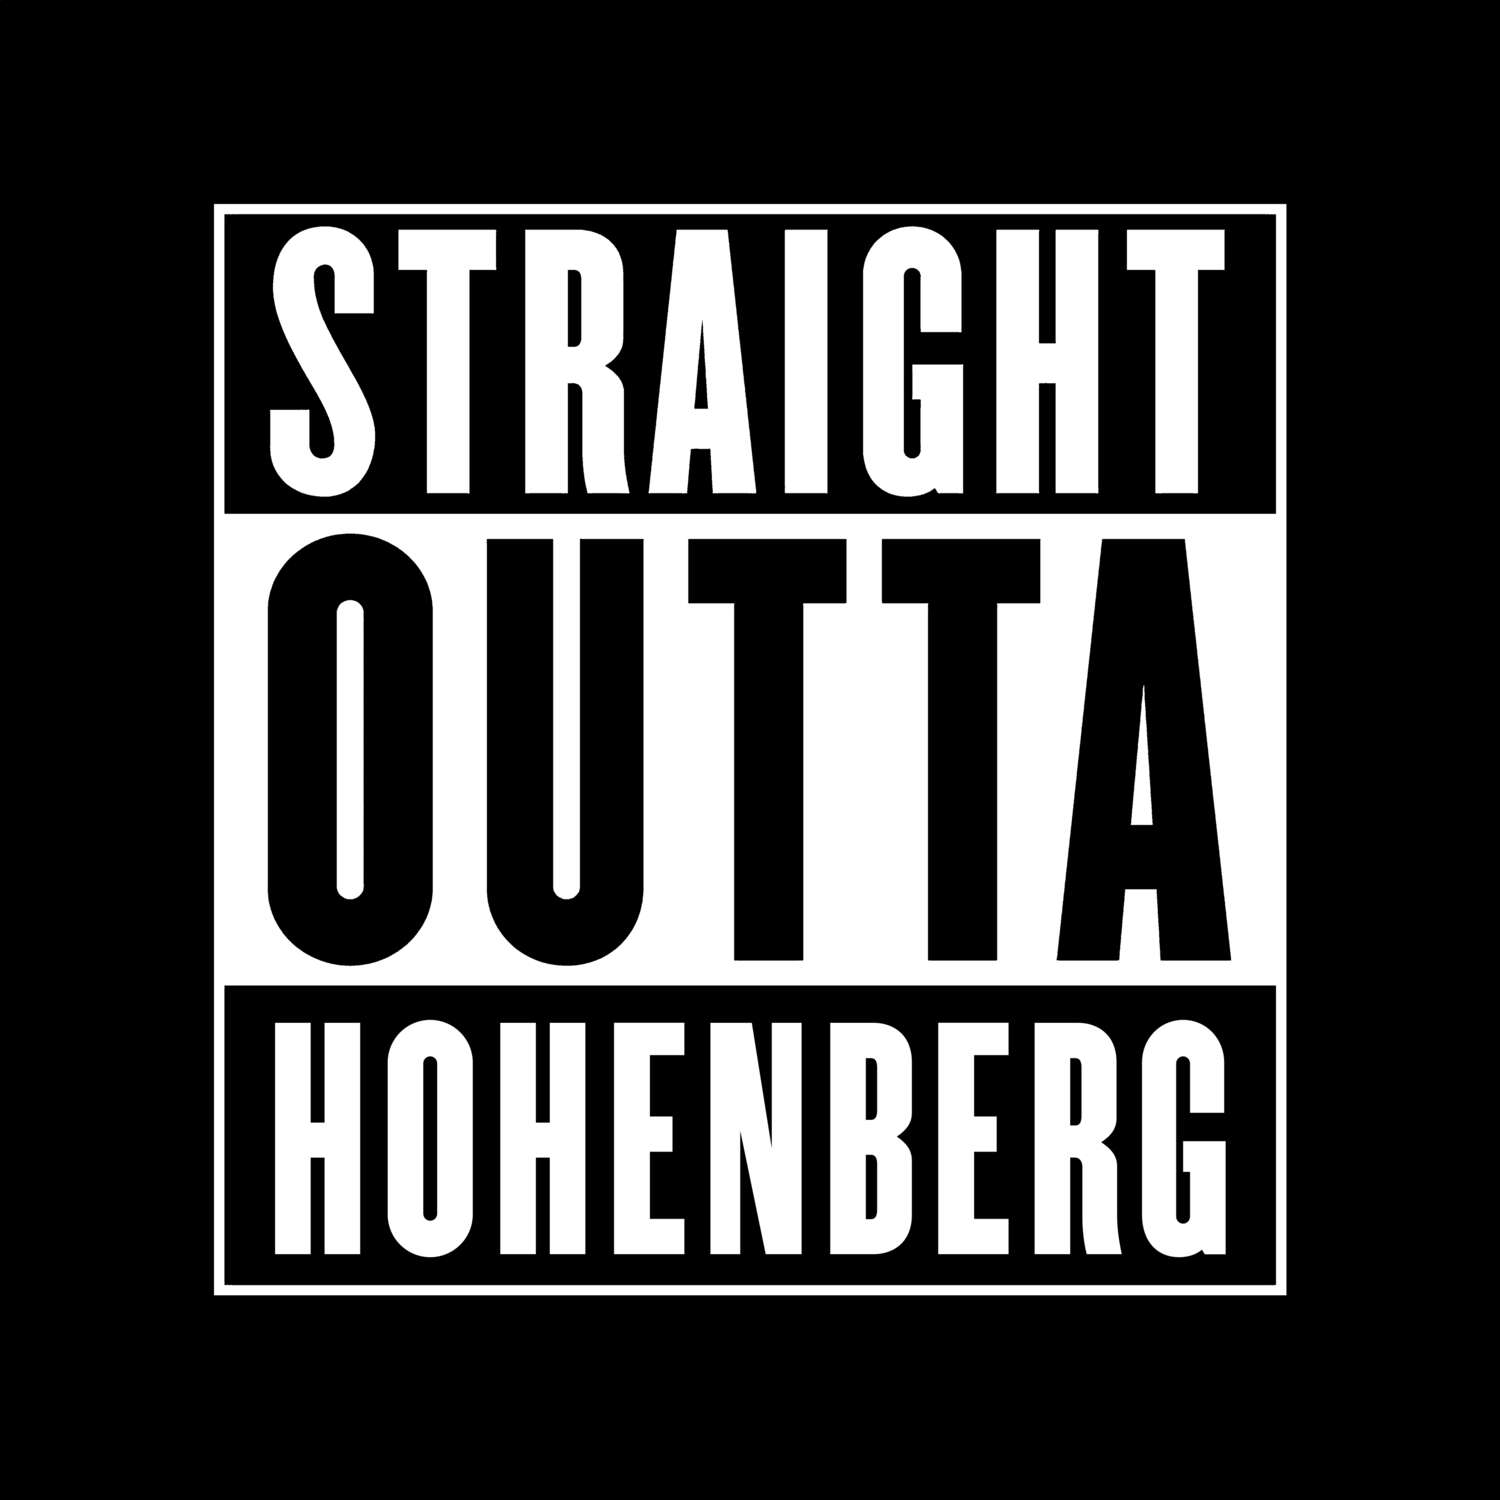 Hohenberg T-Shirt »Straight Outta«